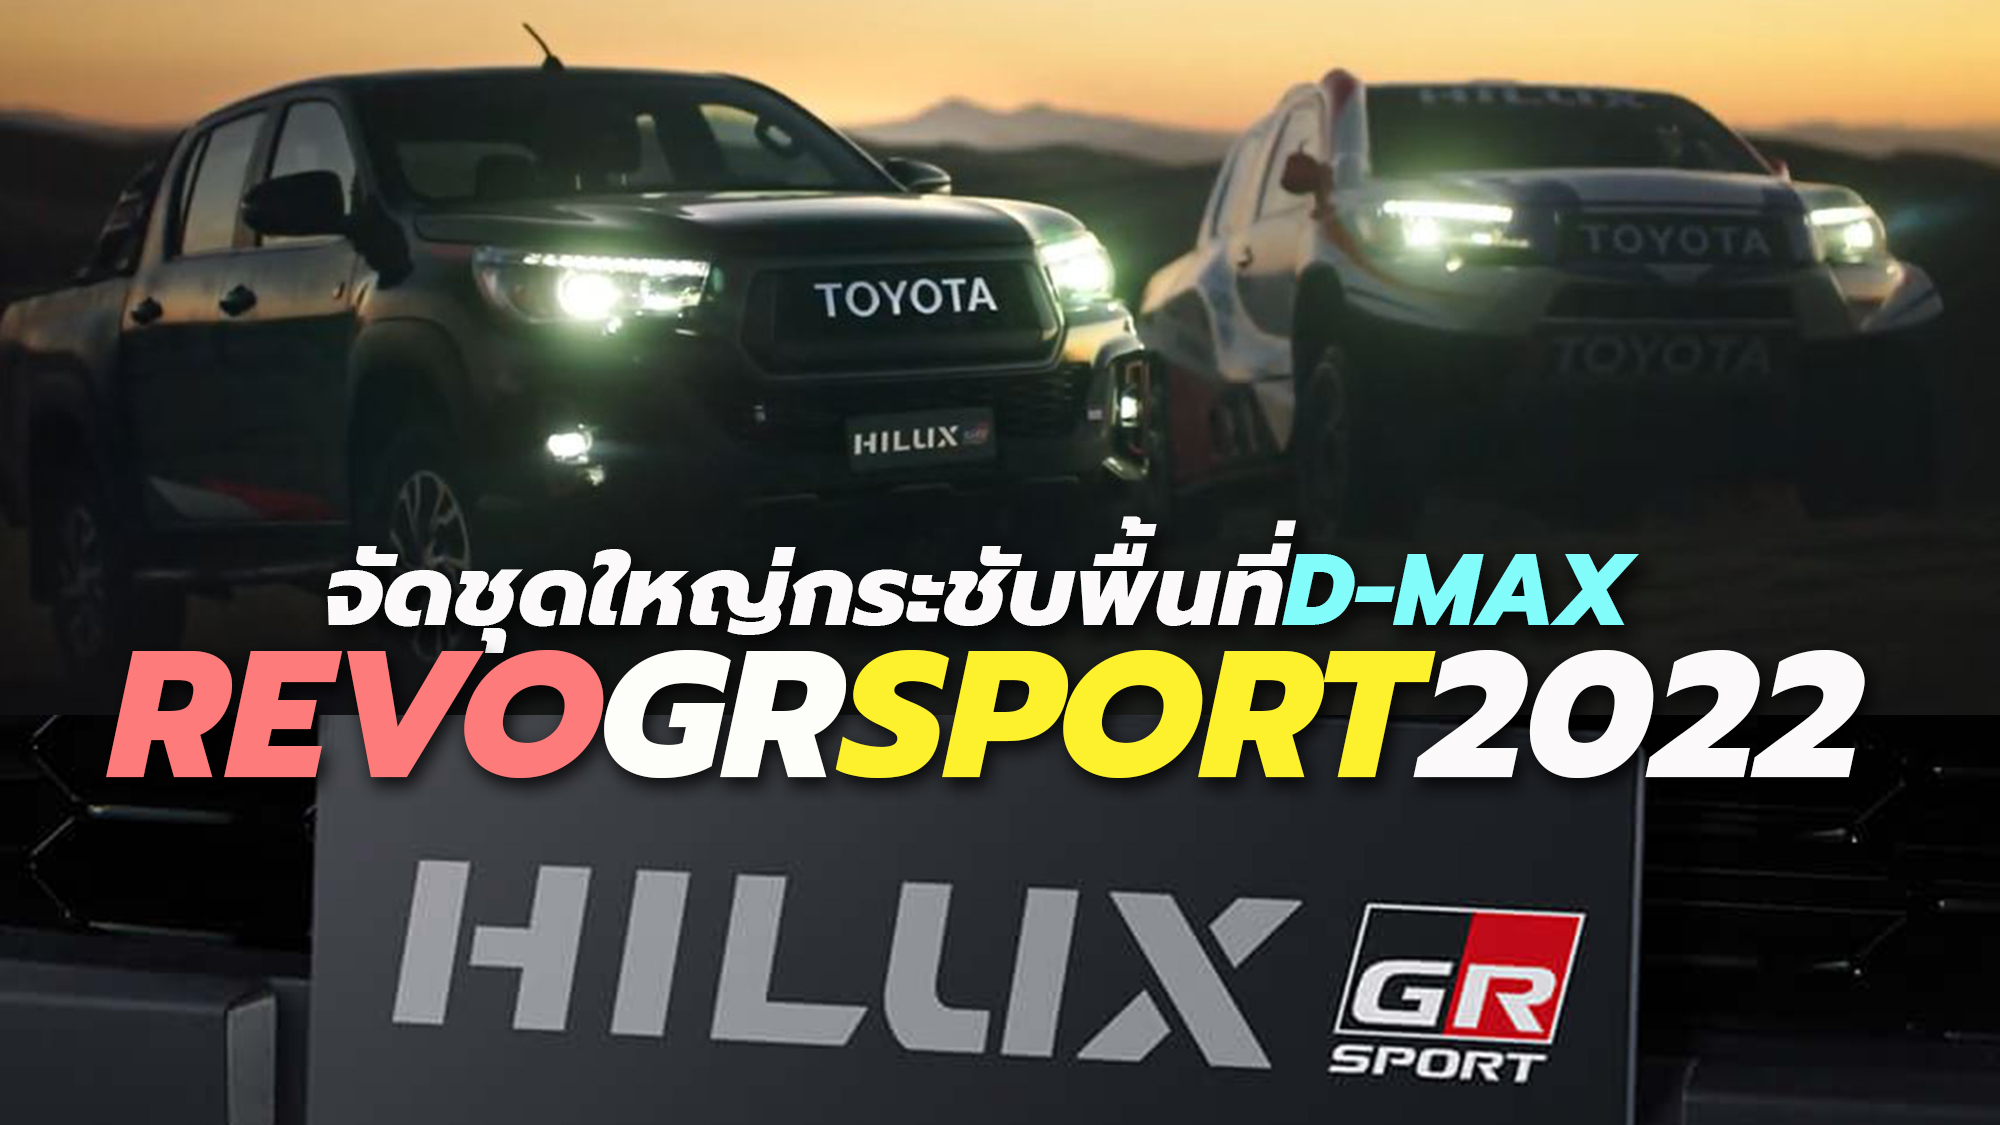 2022 Toyota Hilux Revo GR Sport Thailand